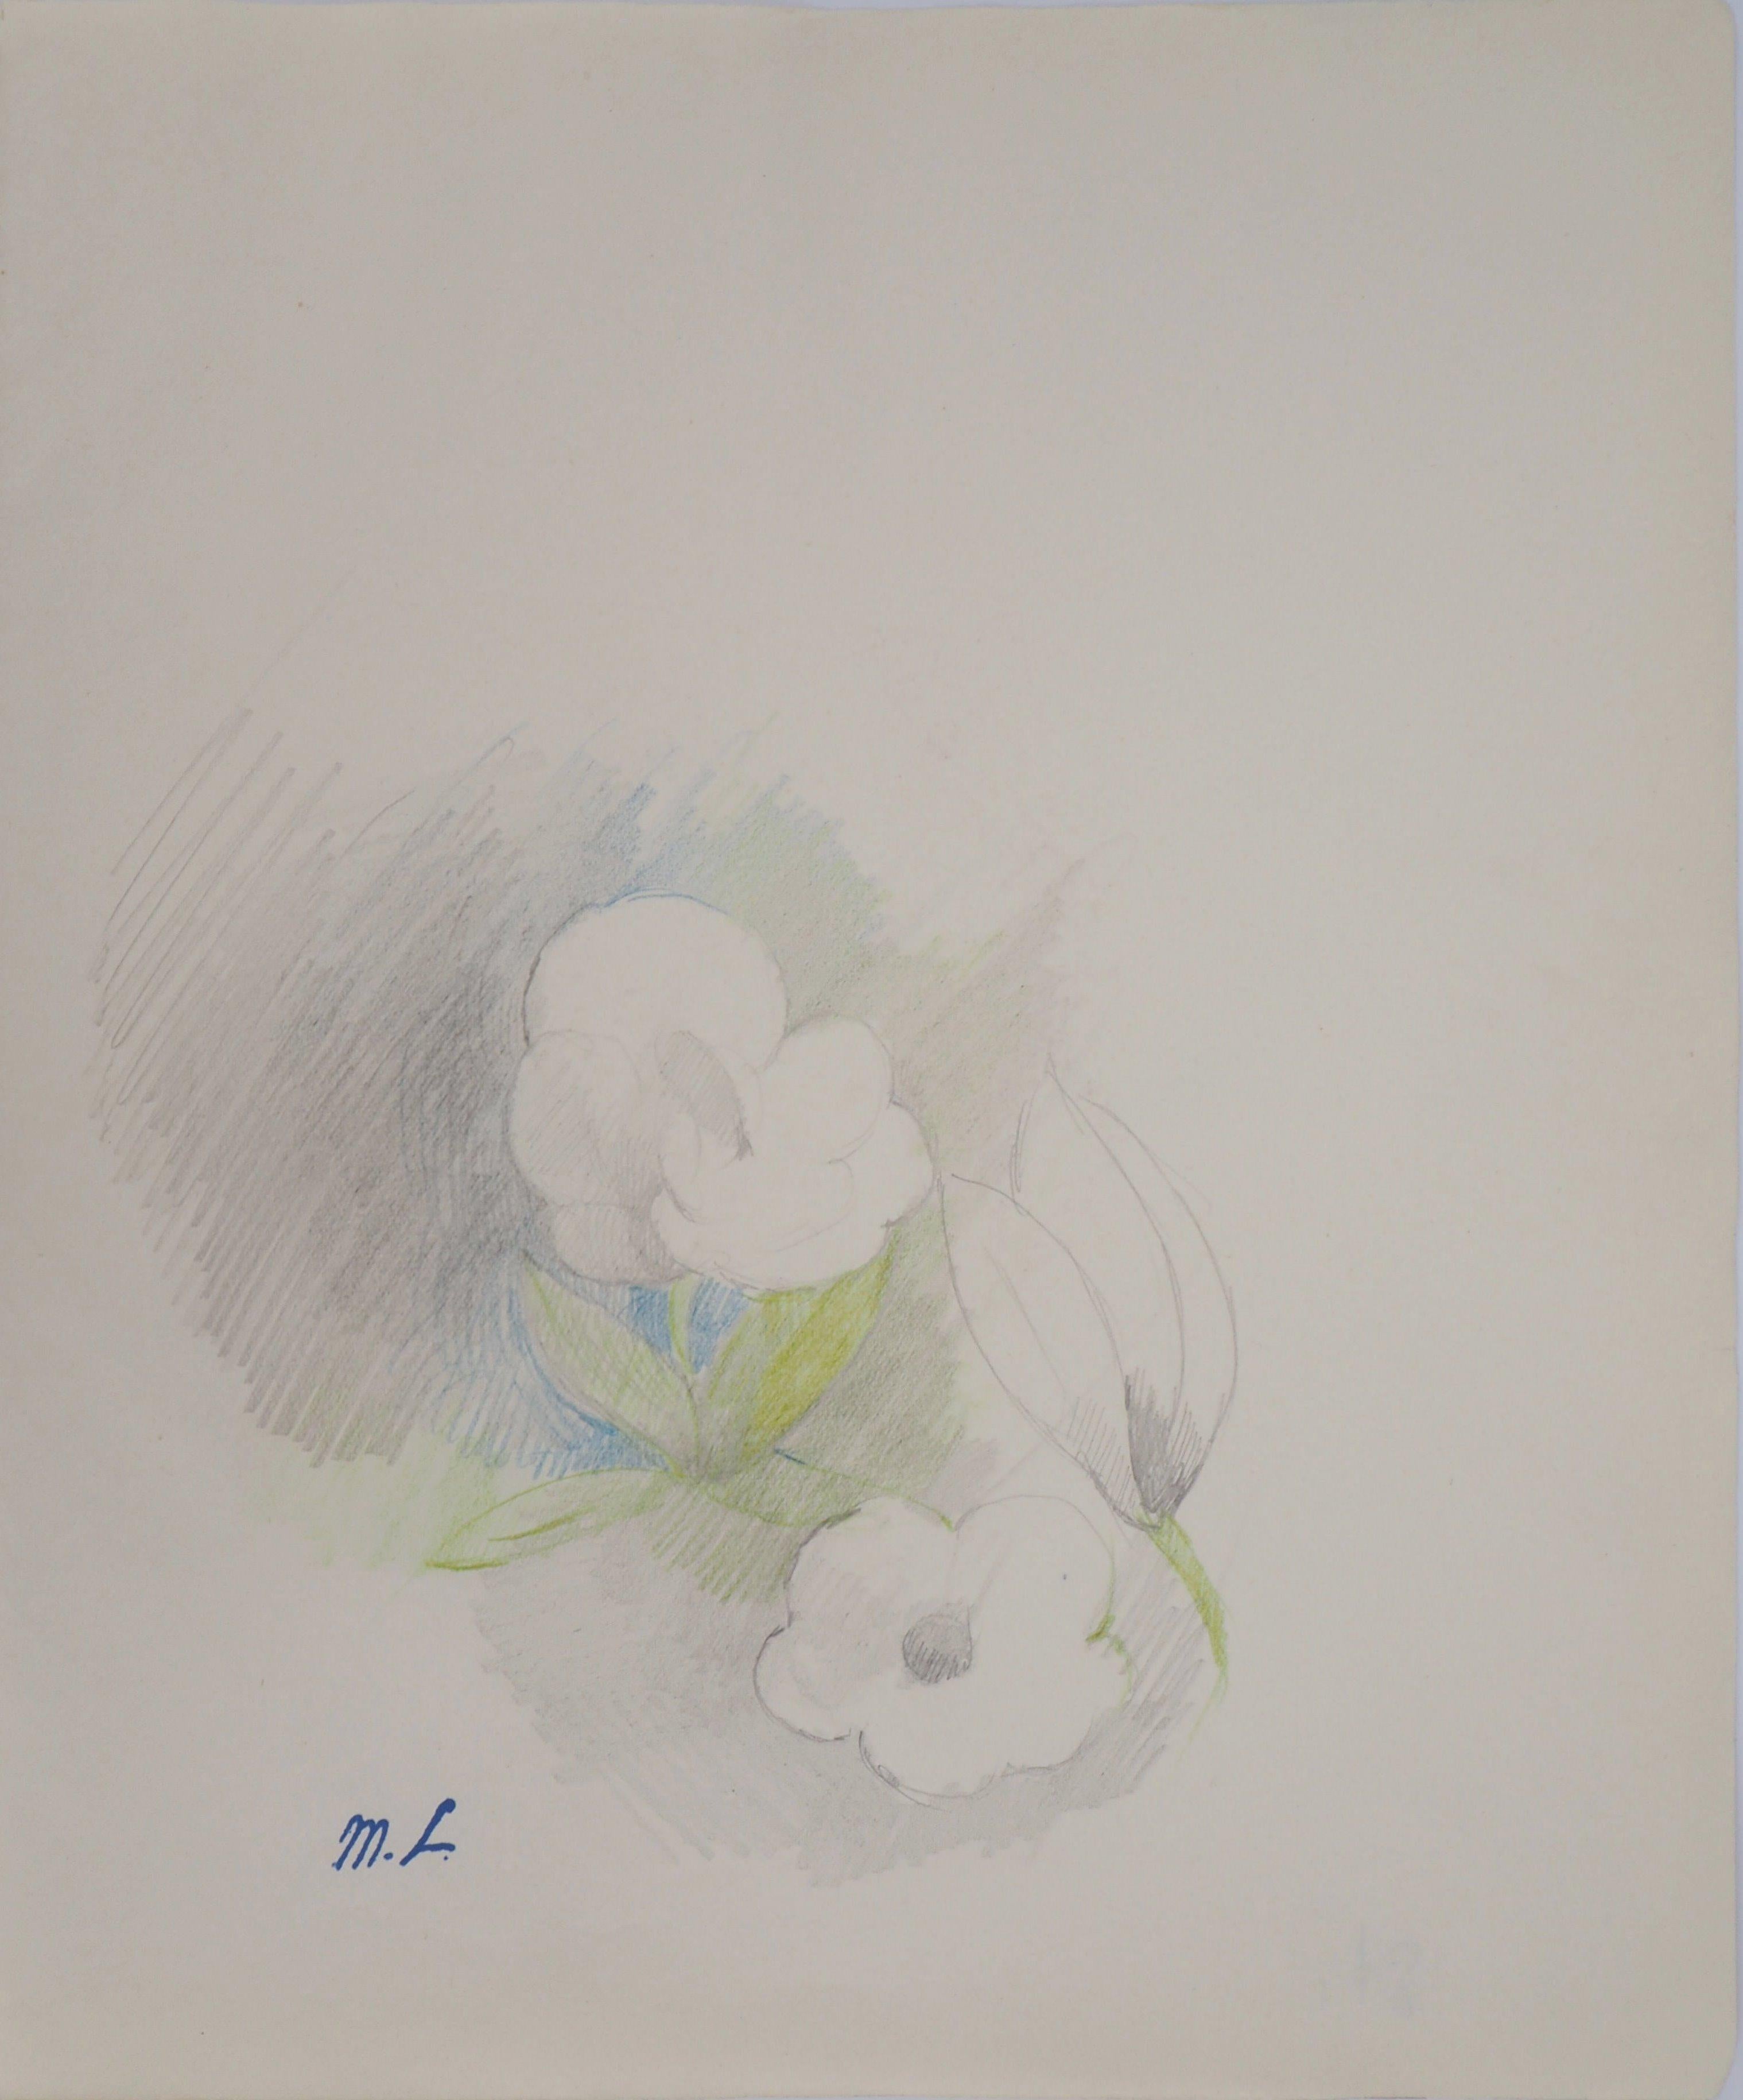 Marie Laurencin Landscape Art - Mirabilis - Original pencil drawing, 1953